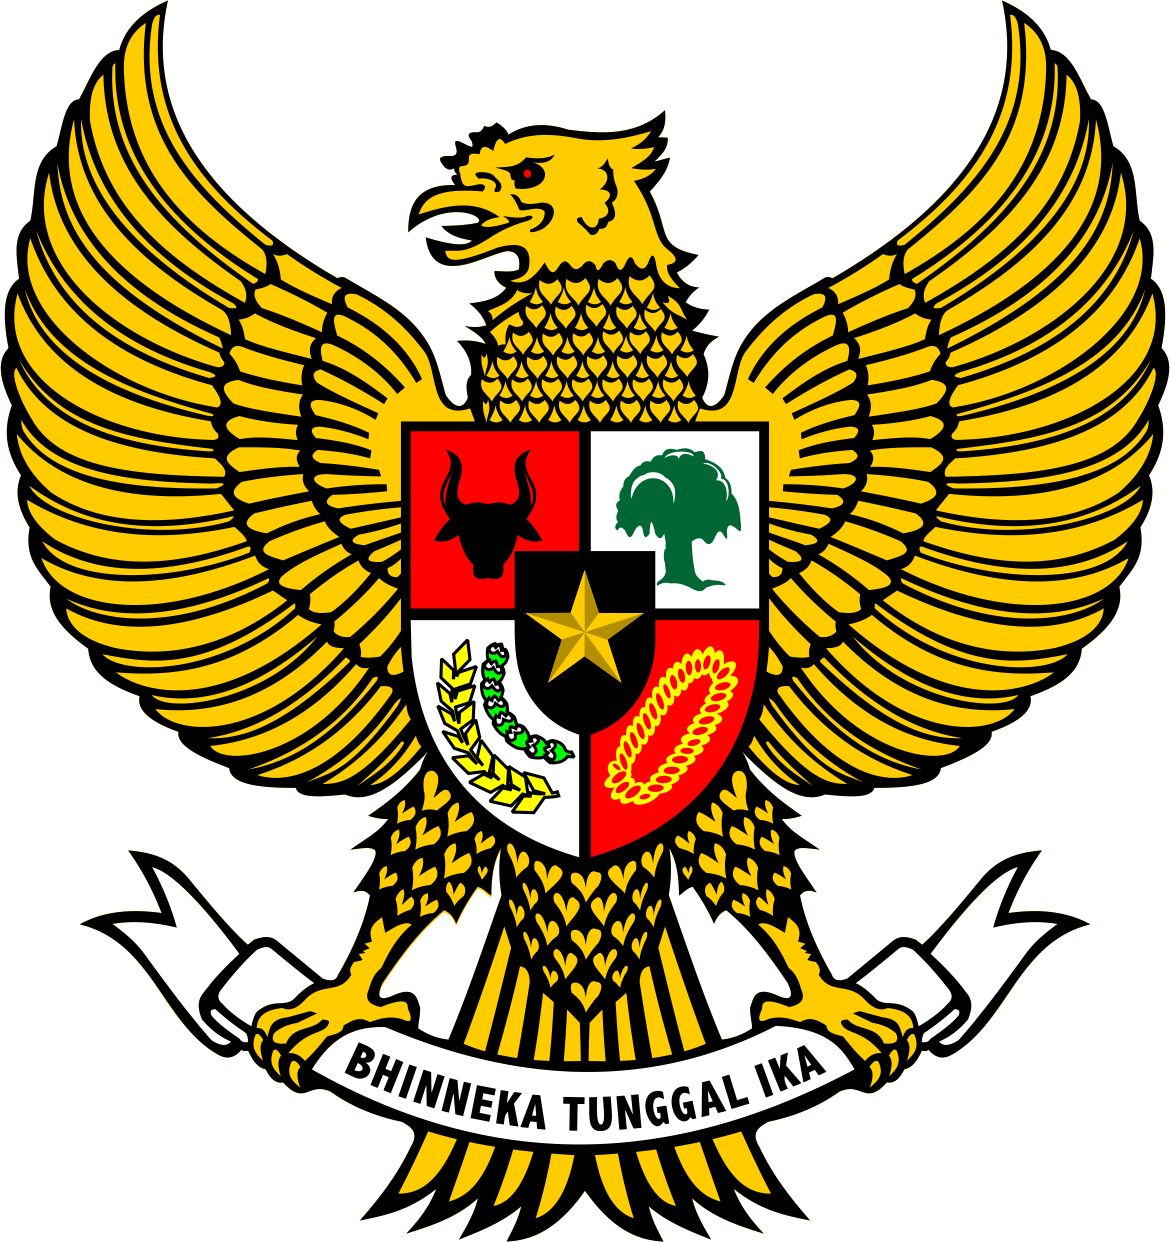 Indonesia - National Emblem Of Indonesia (1170x1242)